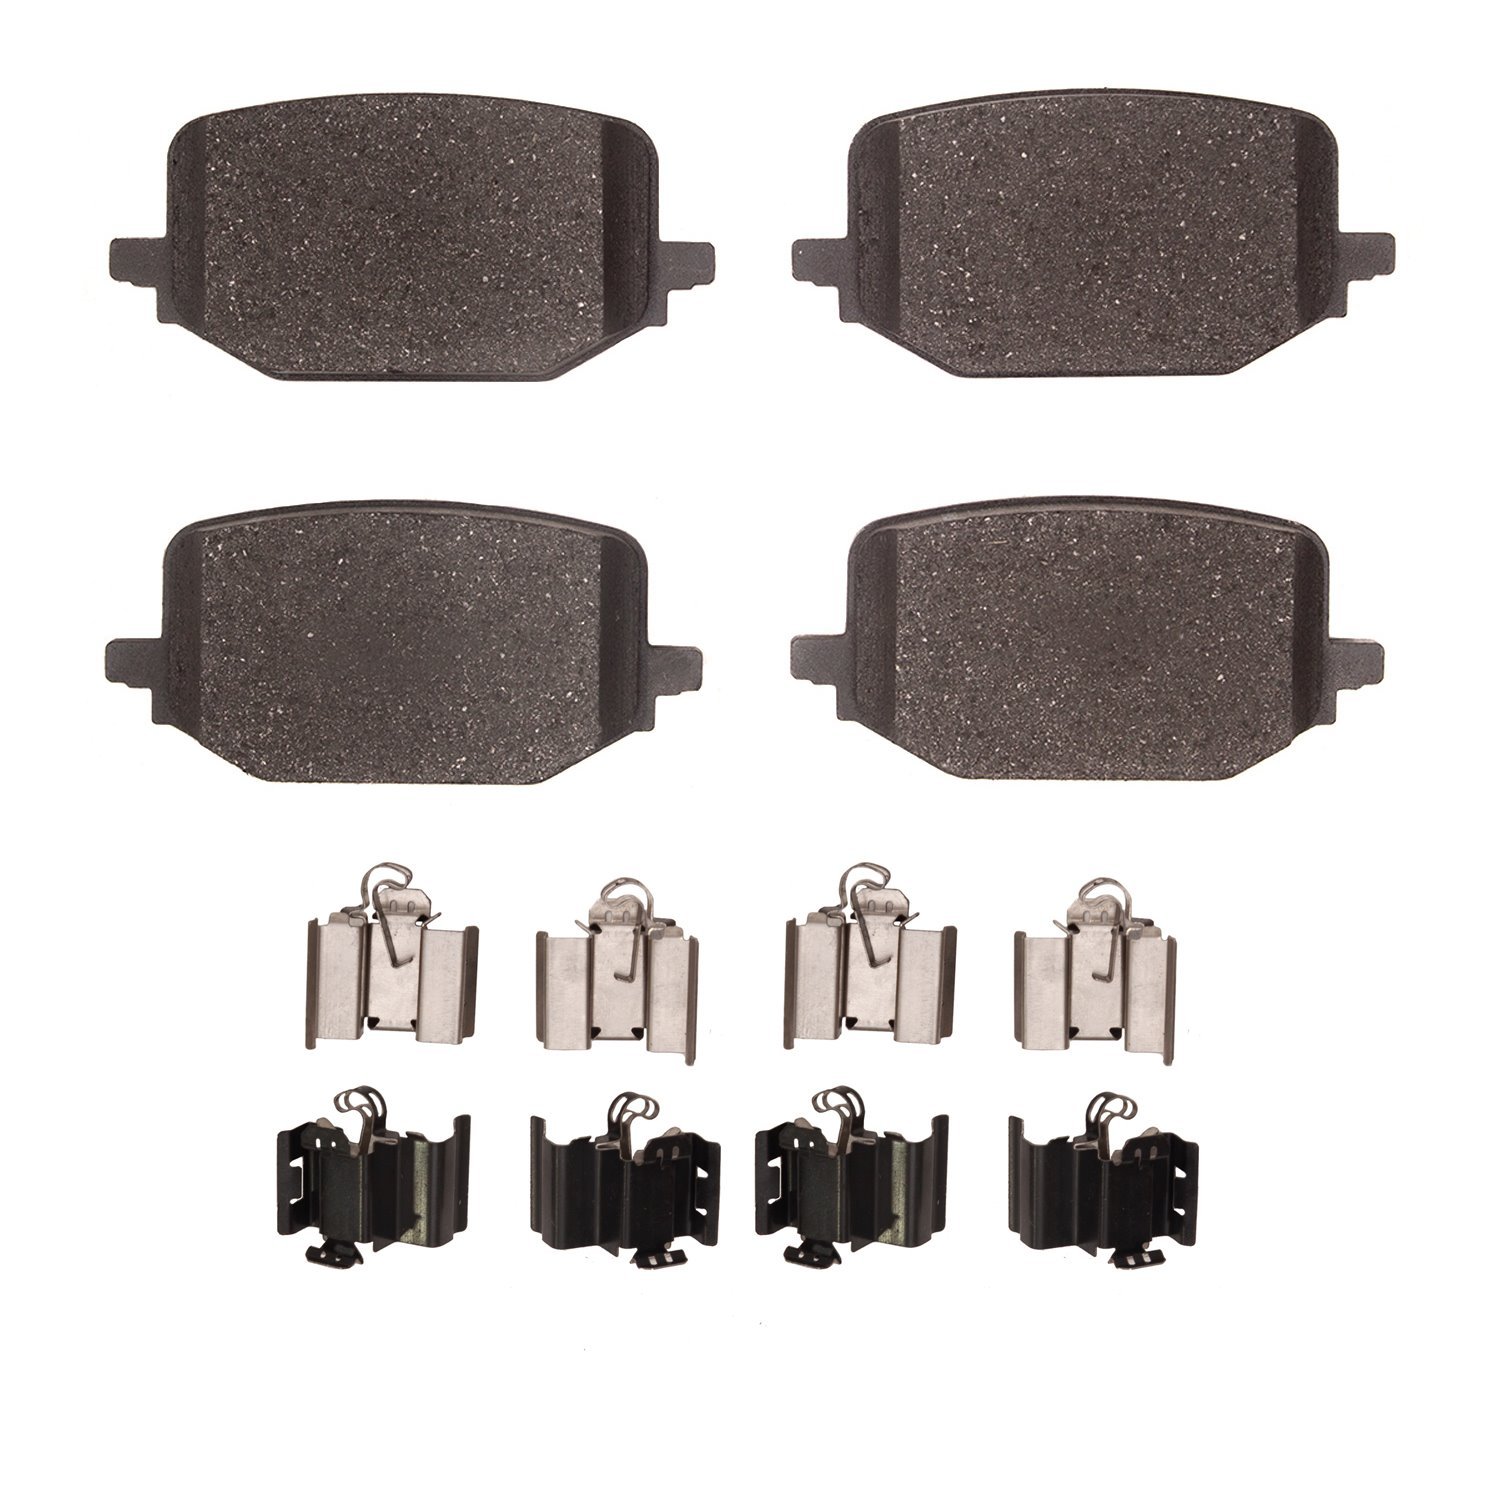 1551-2231-01 5000 Advanced Ceramic Brake Pads & Hardware Kit, Fits Select Ford/Lincoln/Mercury/Mazda, Position: Rear